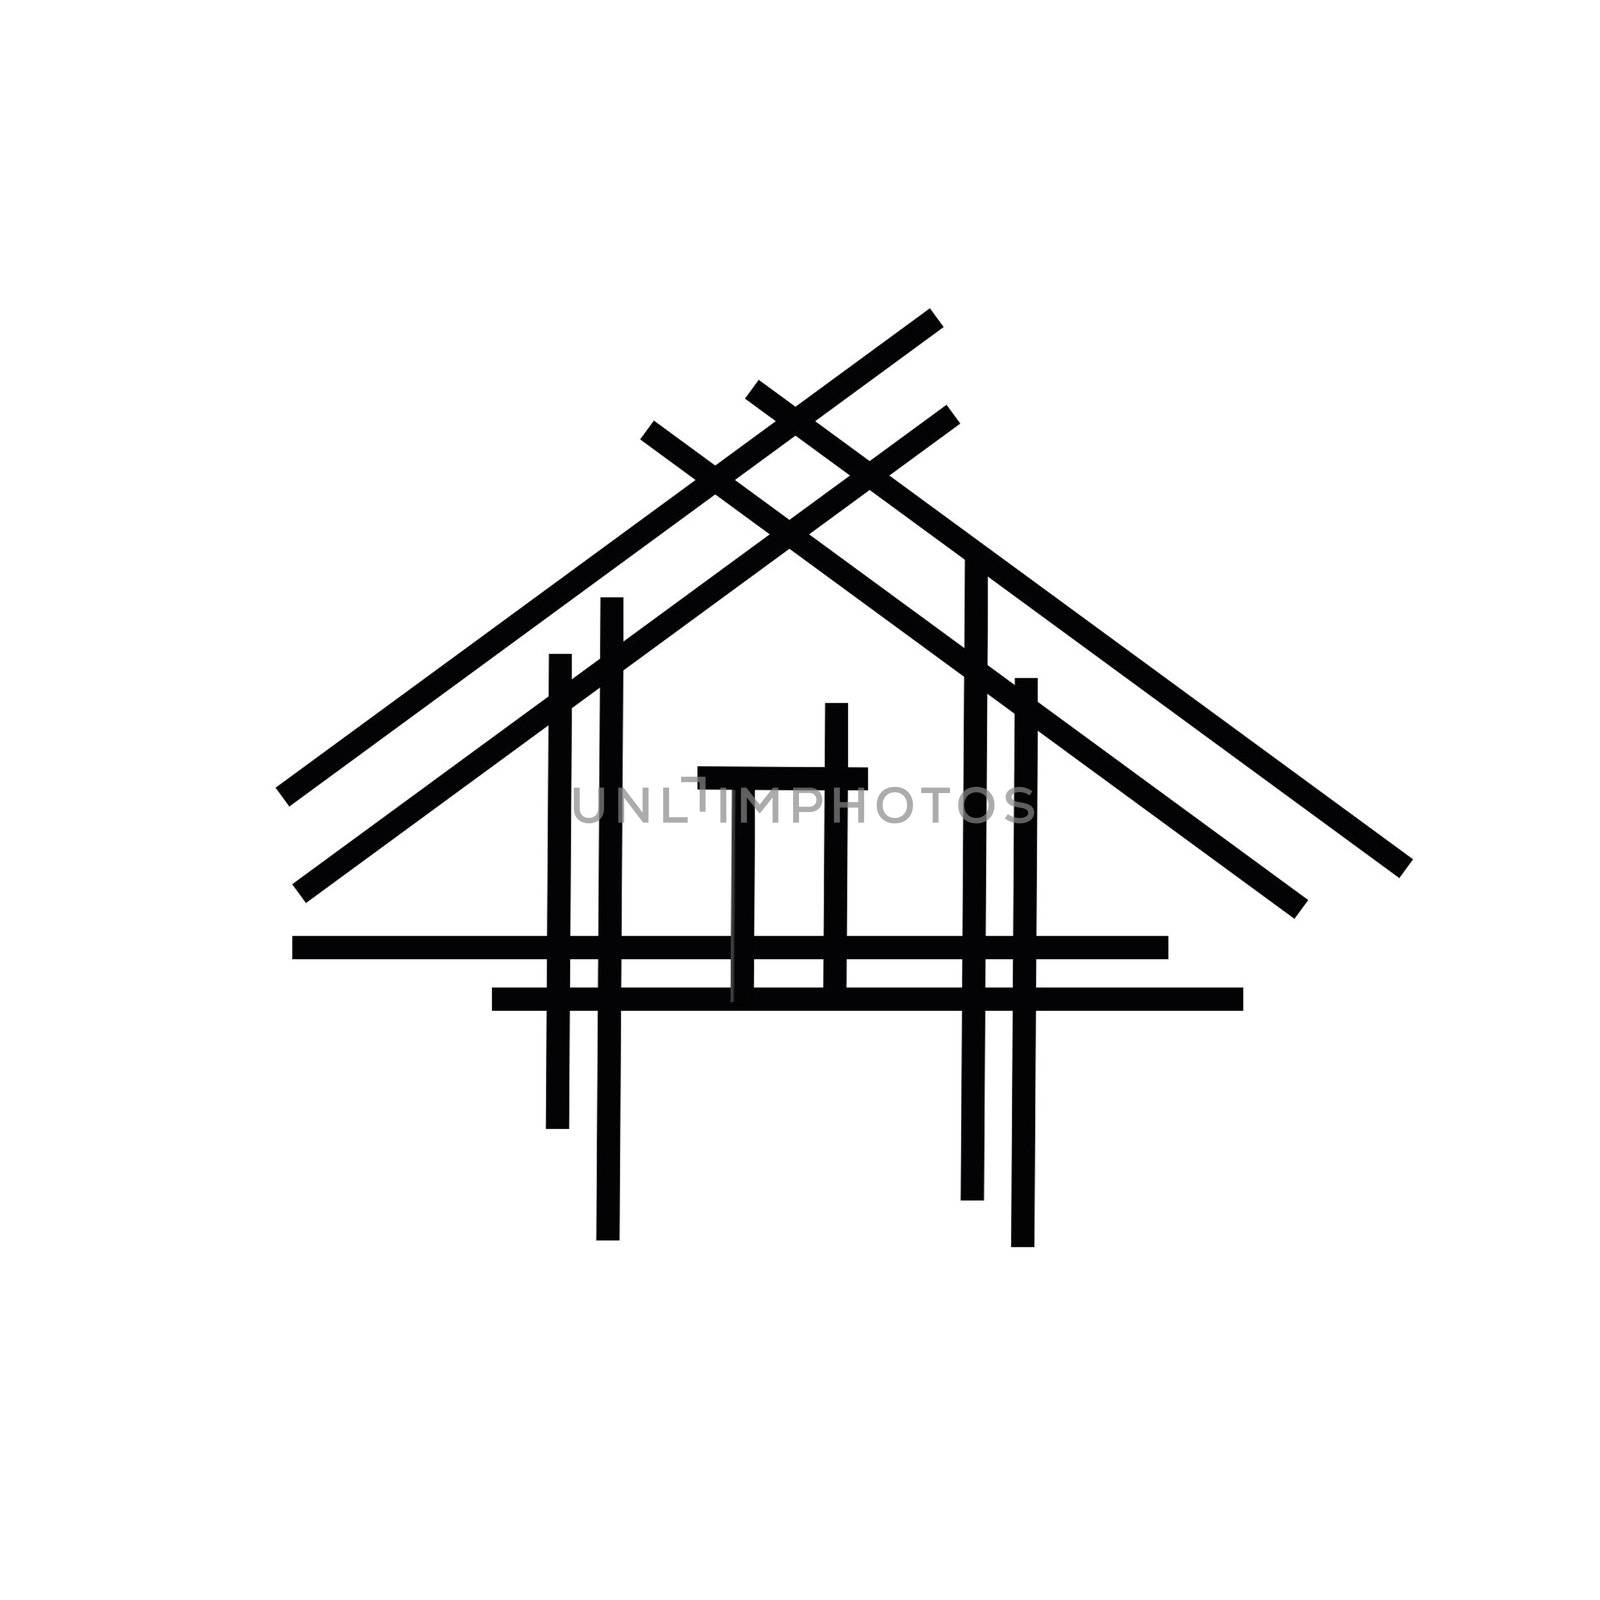 Real estate house logo by shawlinmohd